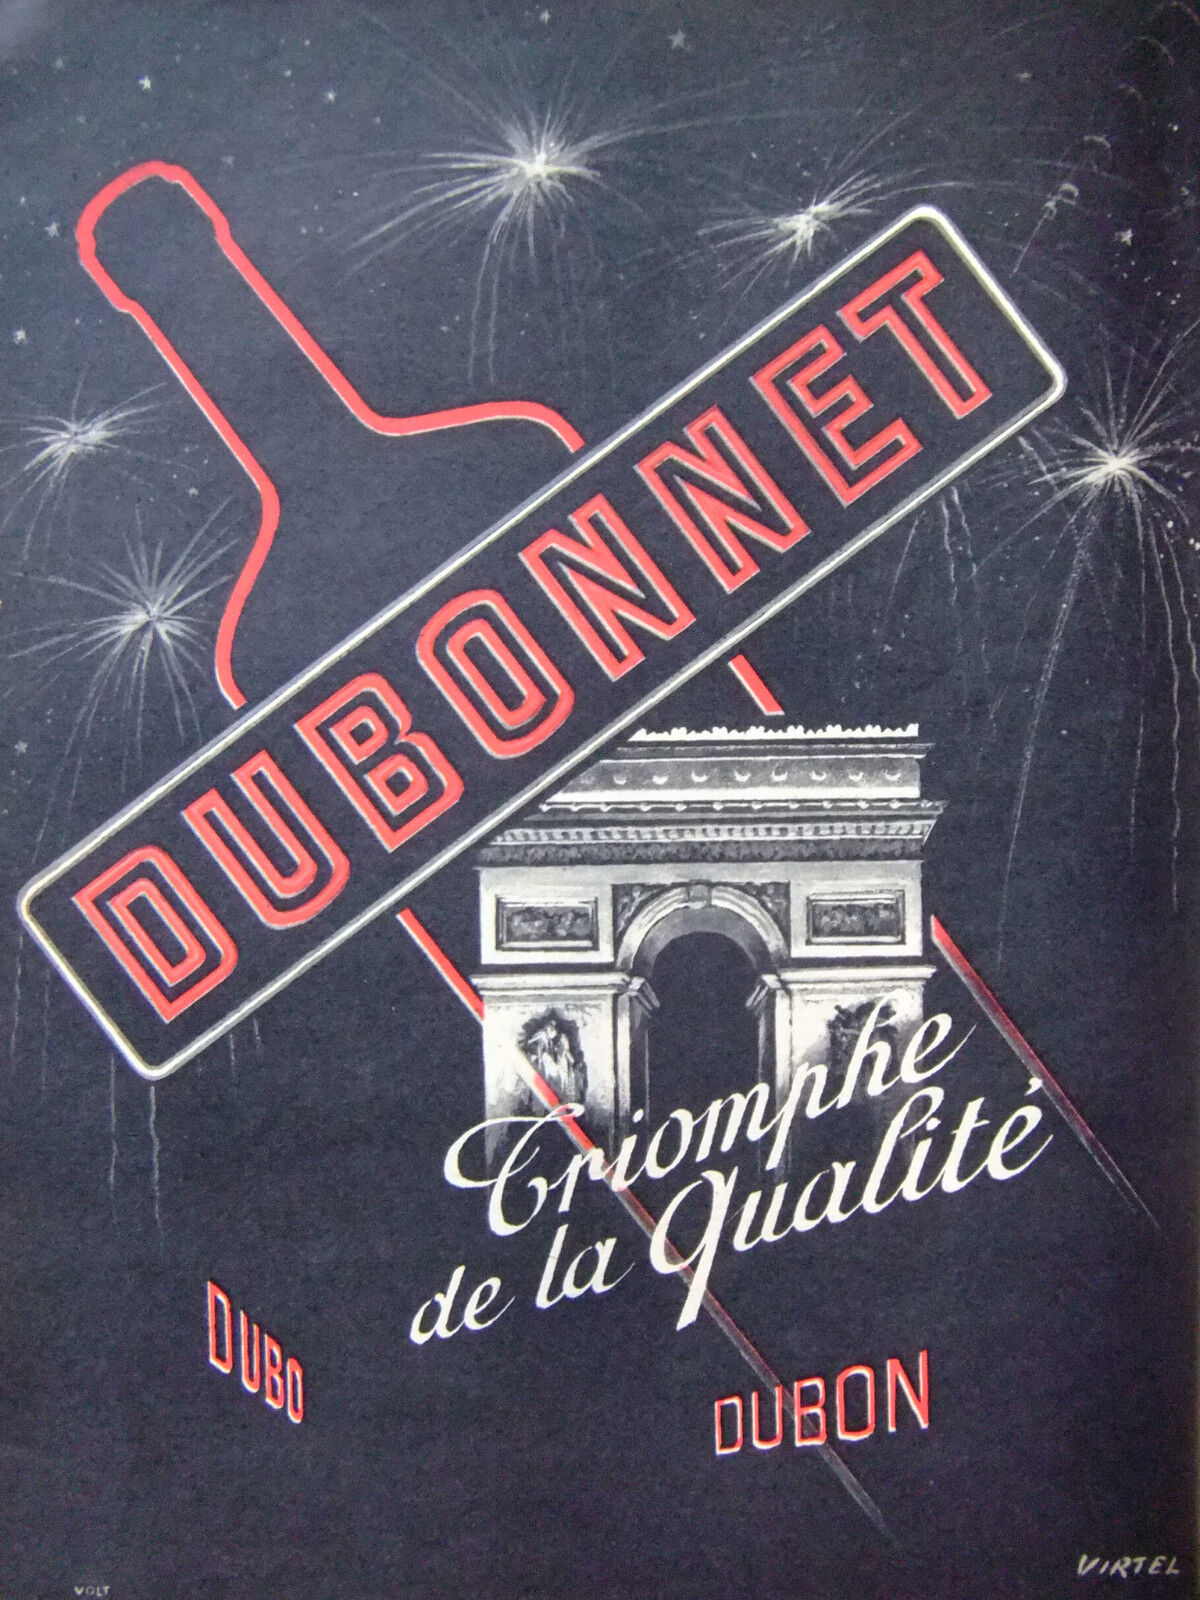 1952 DUBONNET QUALITY TRIUMPH PRESS ADVERTISING - VIRTUAL - ADVERTISING